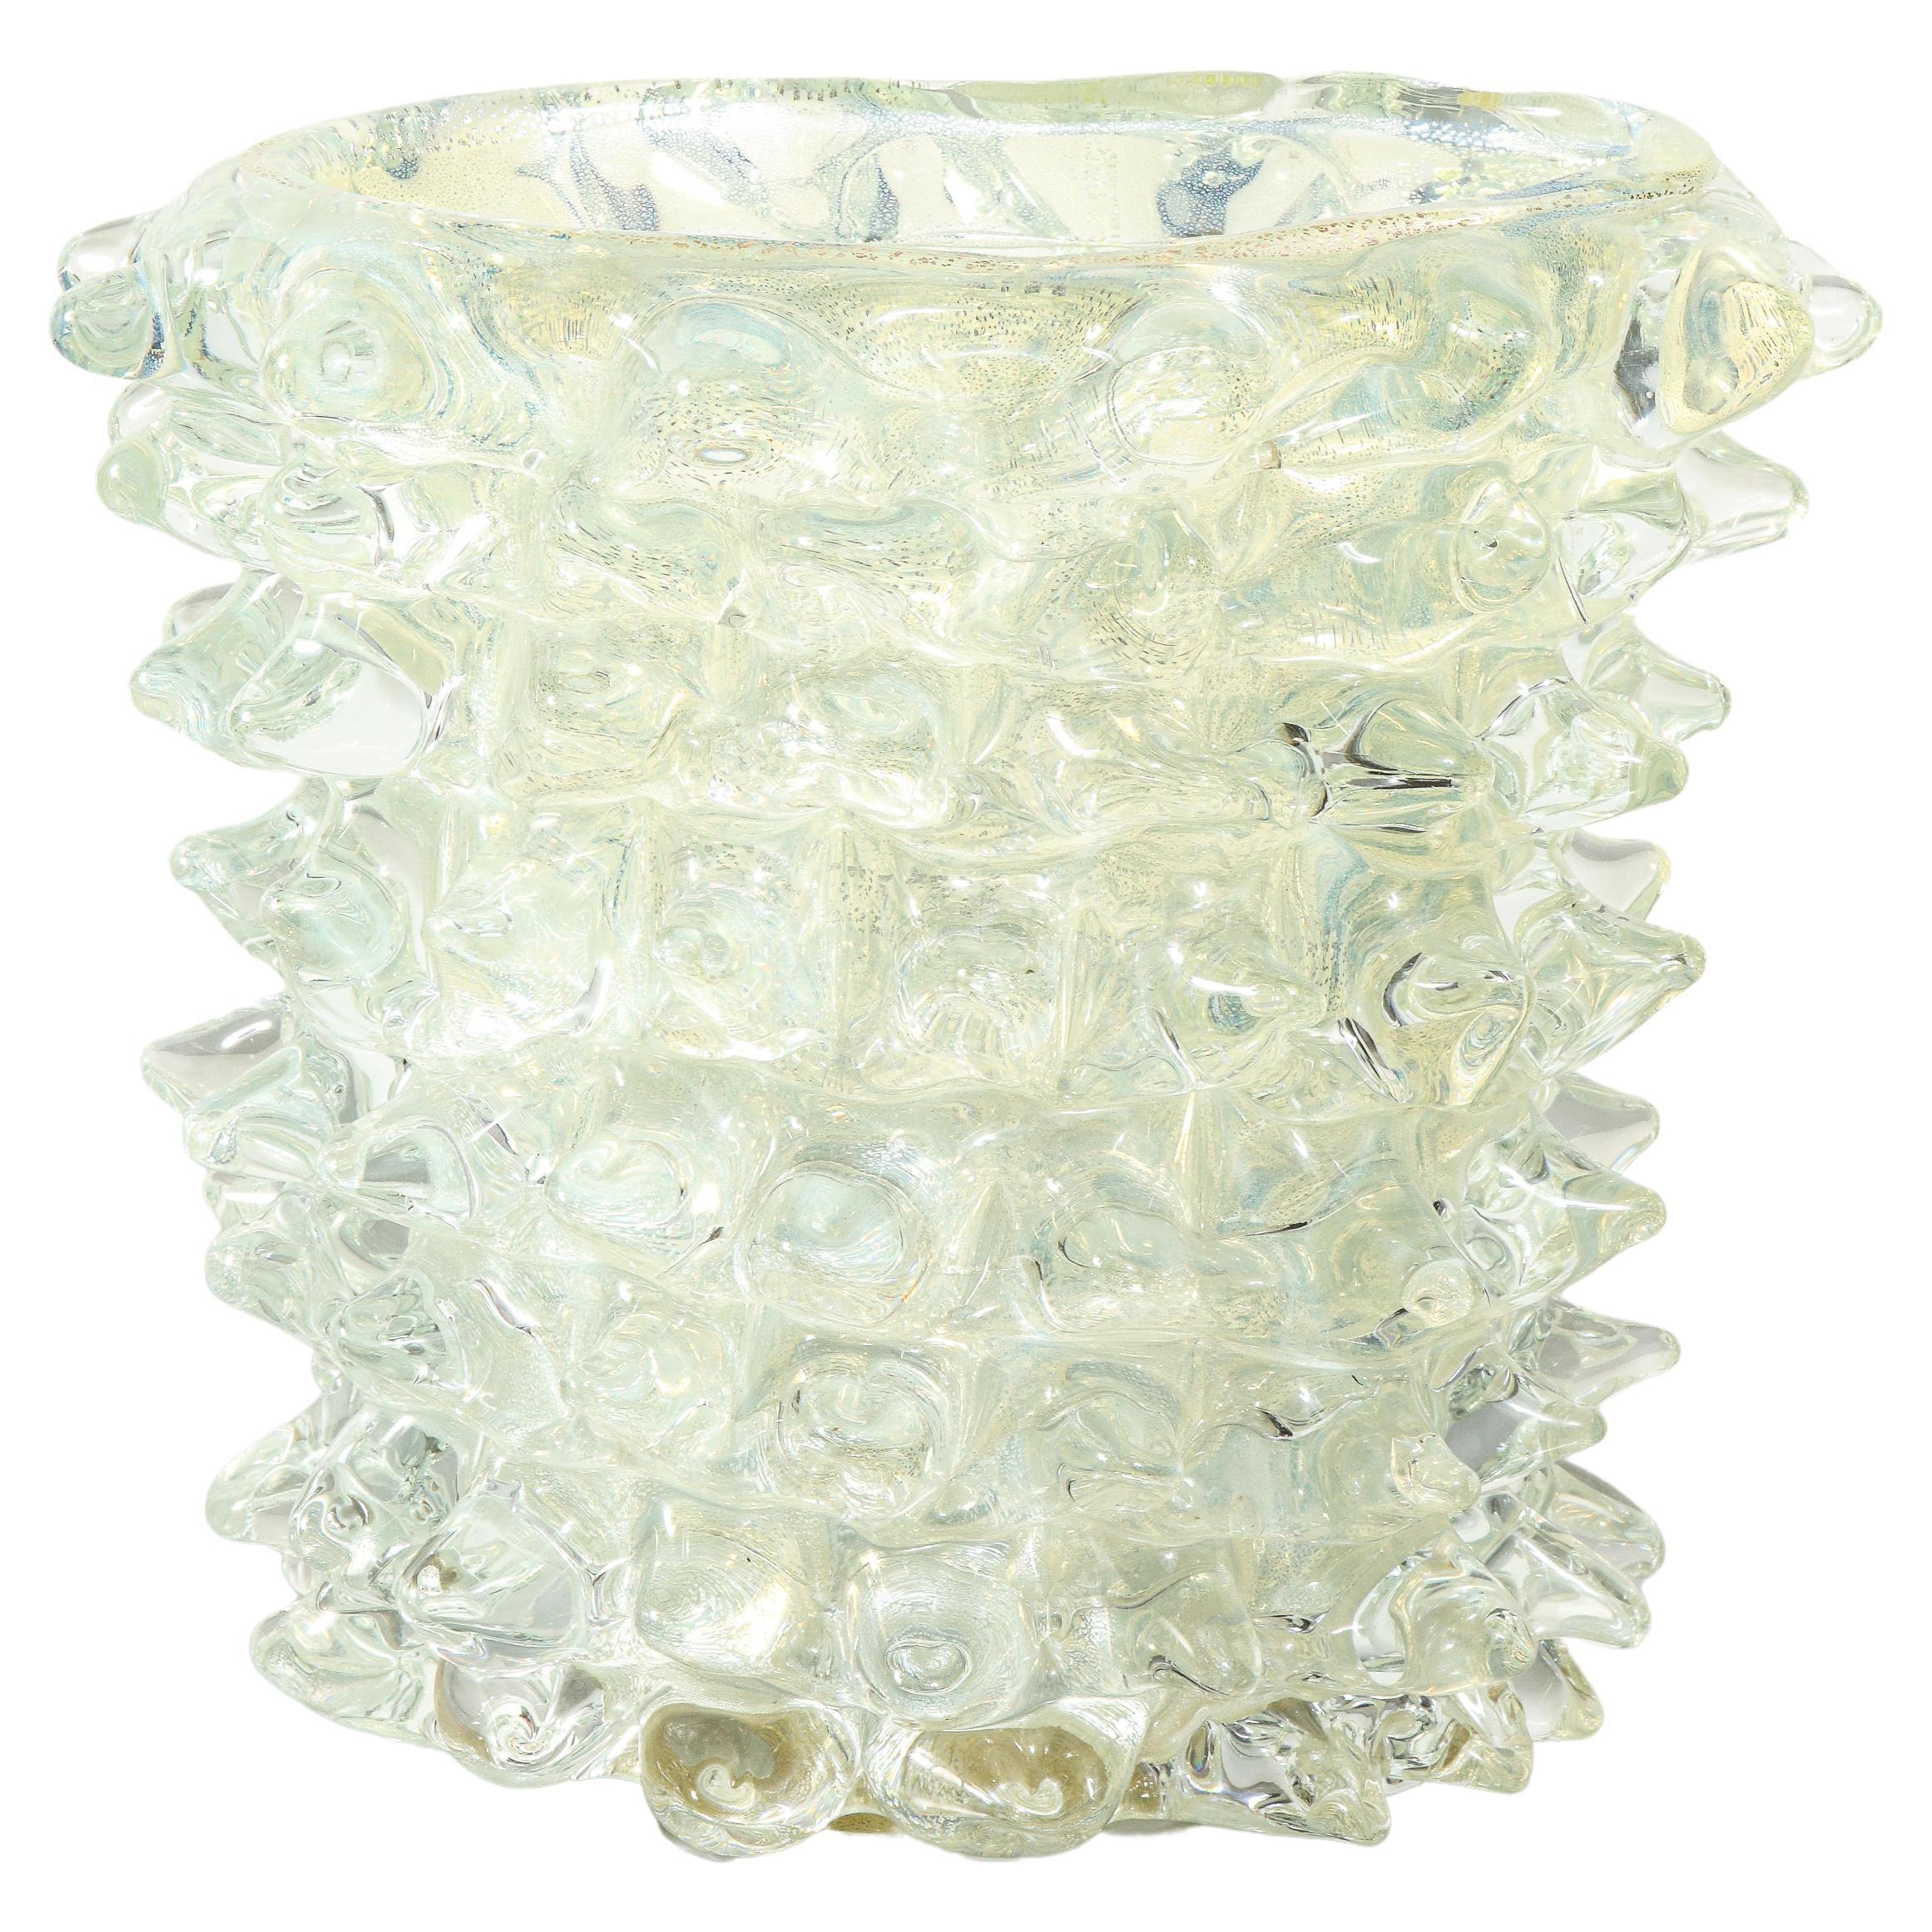 Silver Opalescent Murano Glass Spike Vase